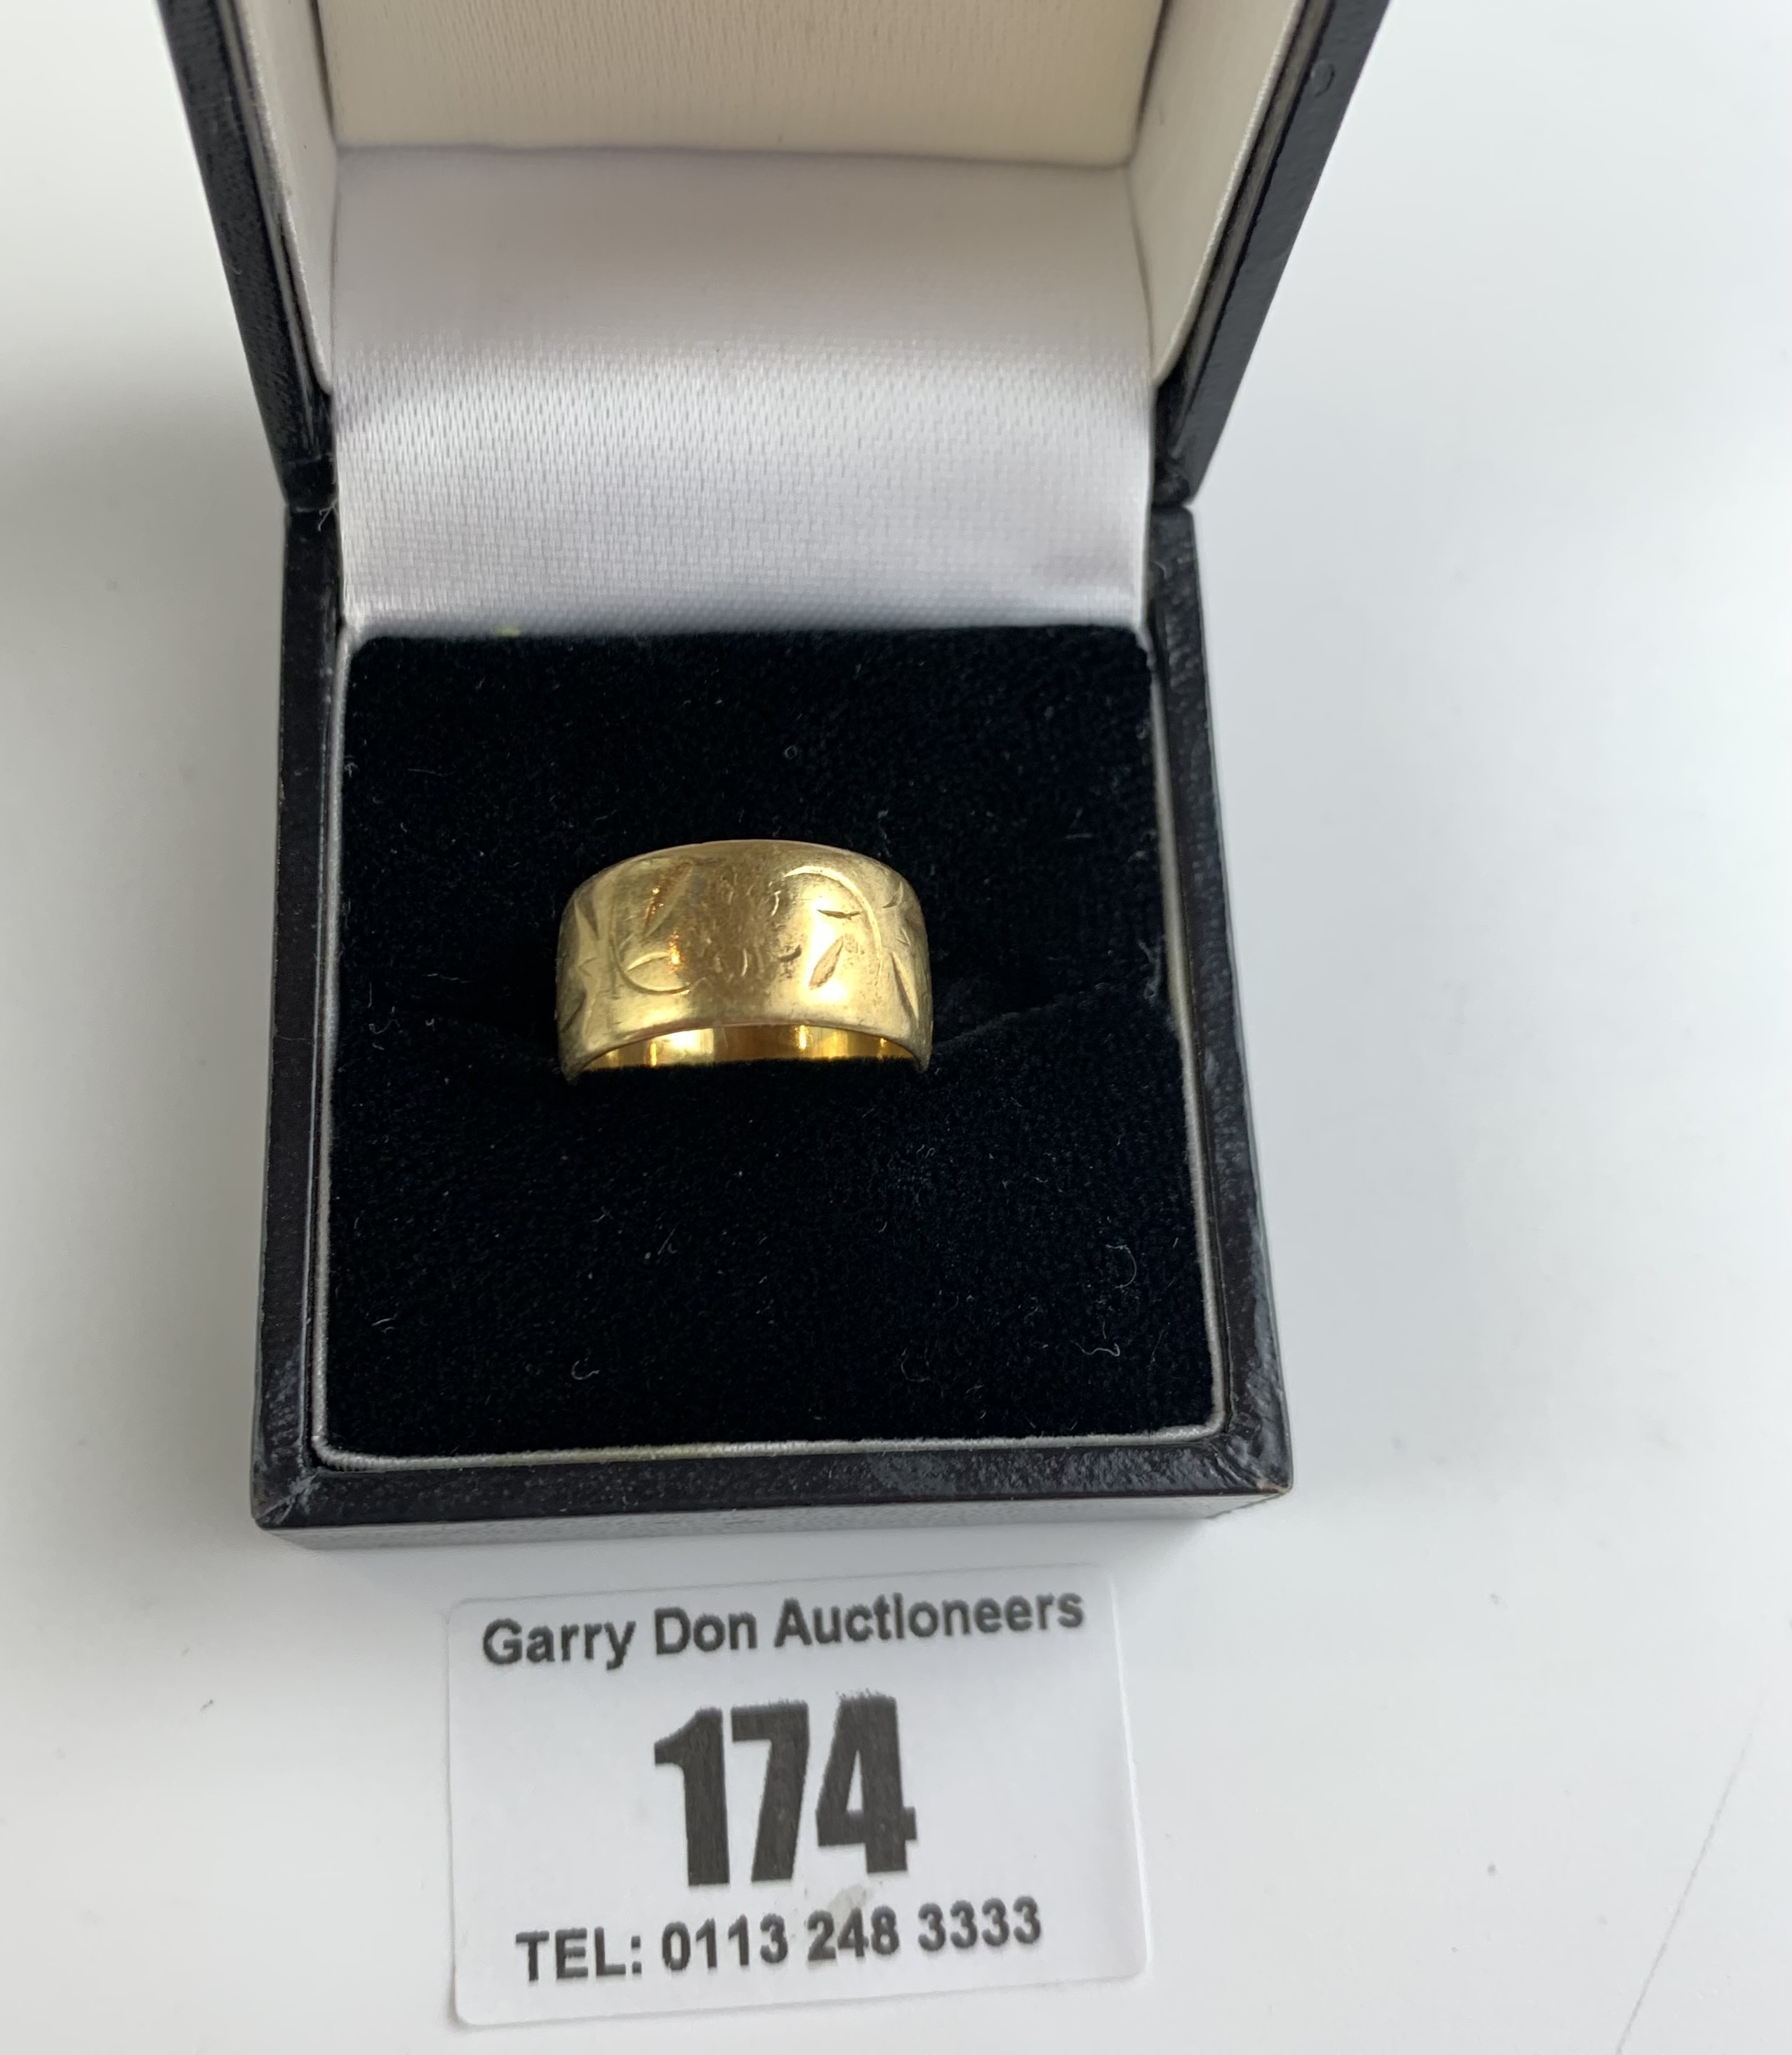 18k gold engraved wedding band, size J, w: 5.5 gms - Image 5 of 5